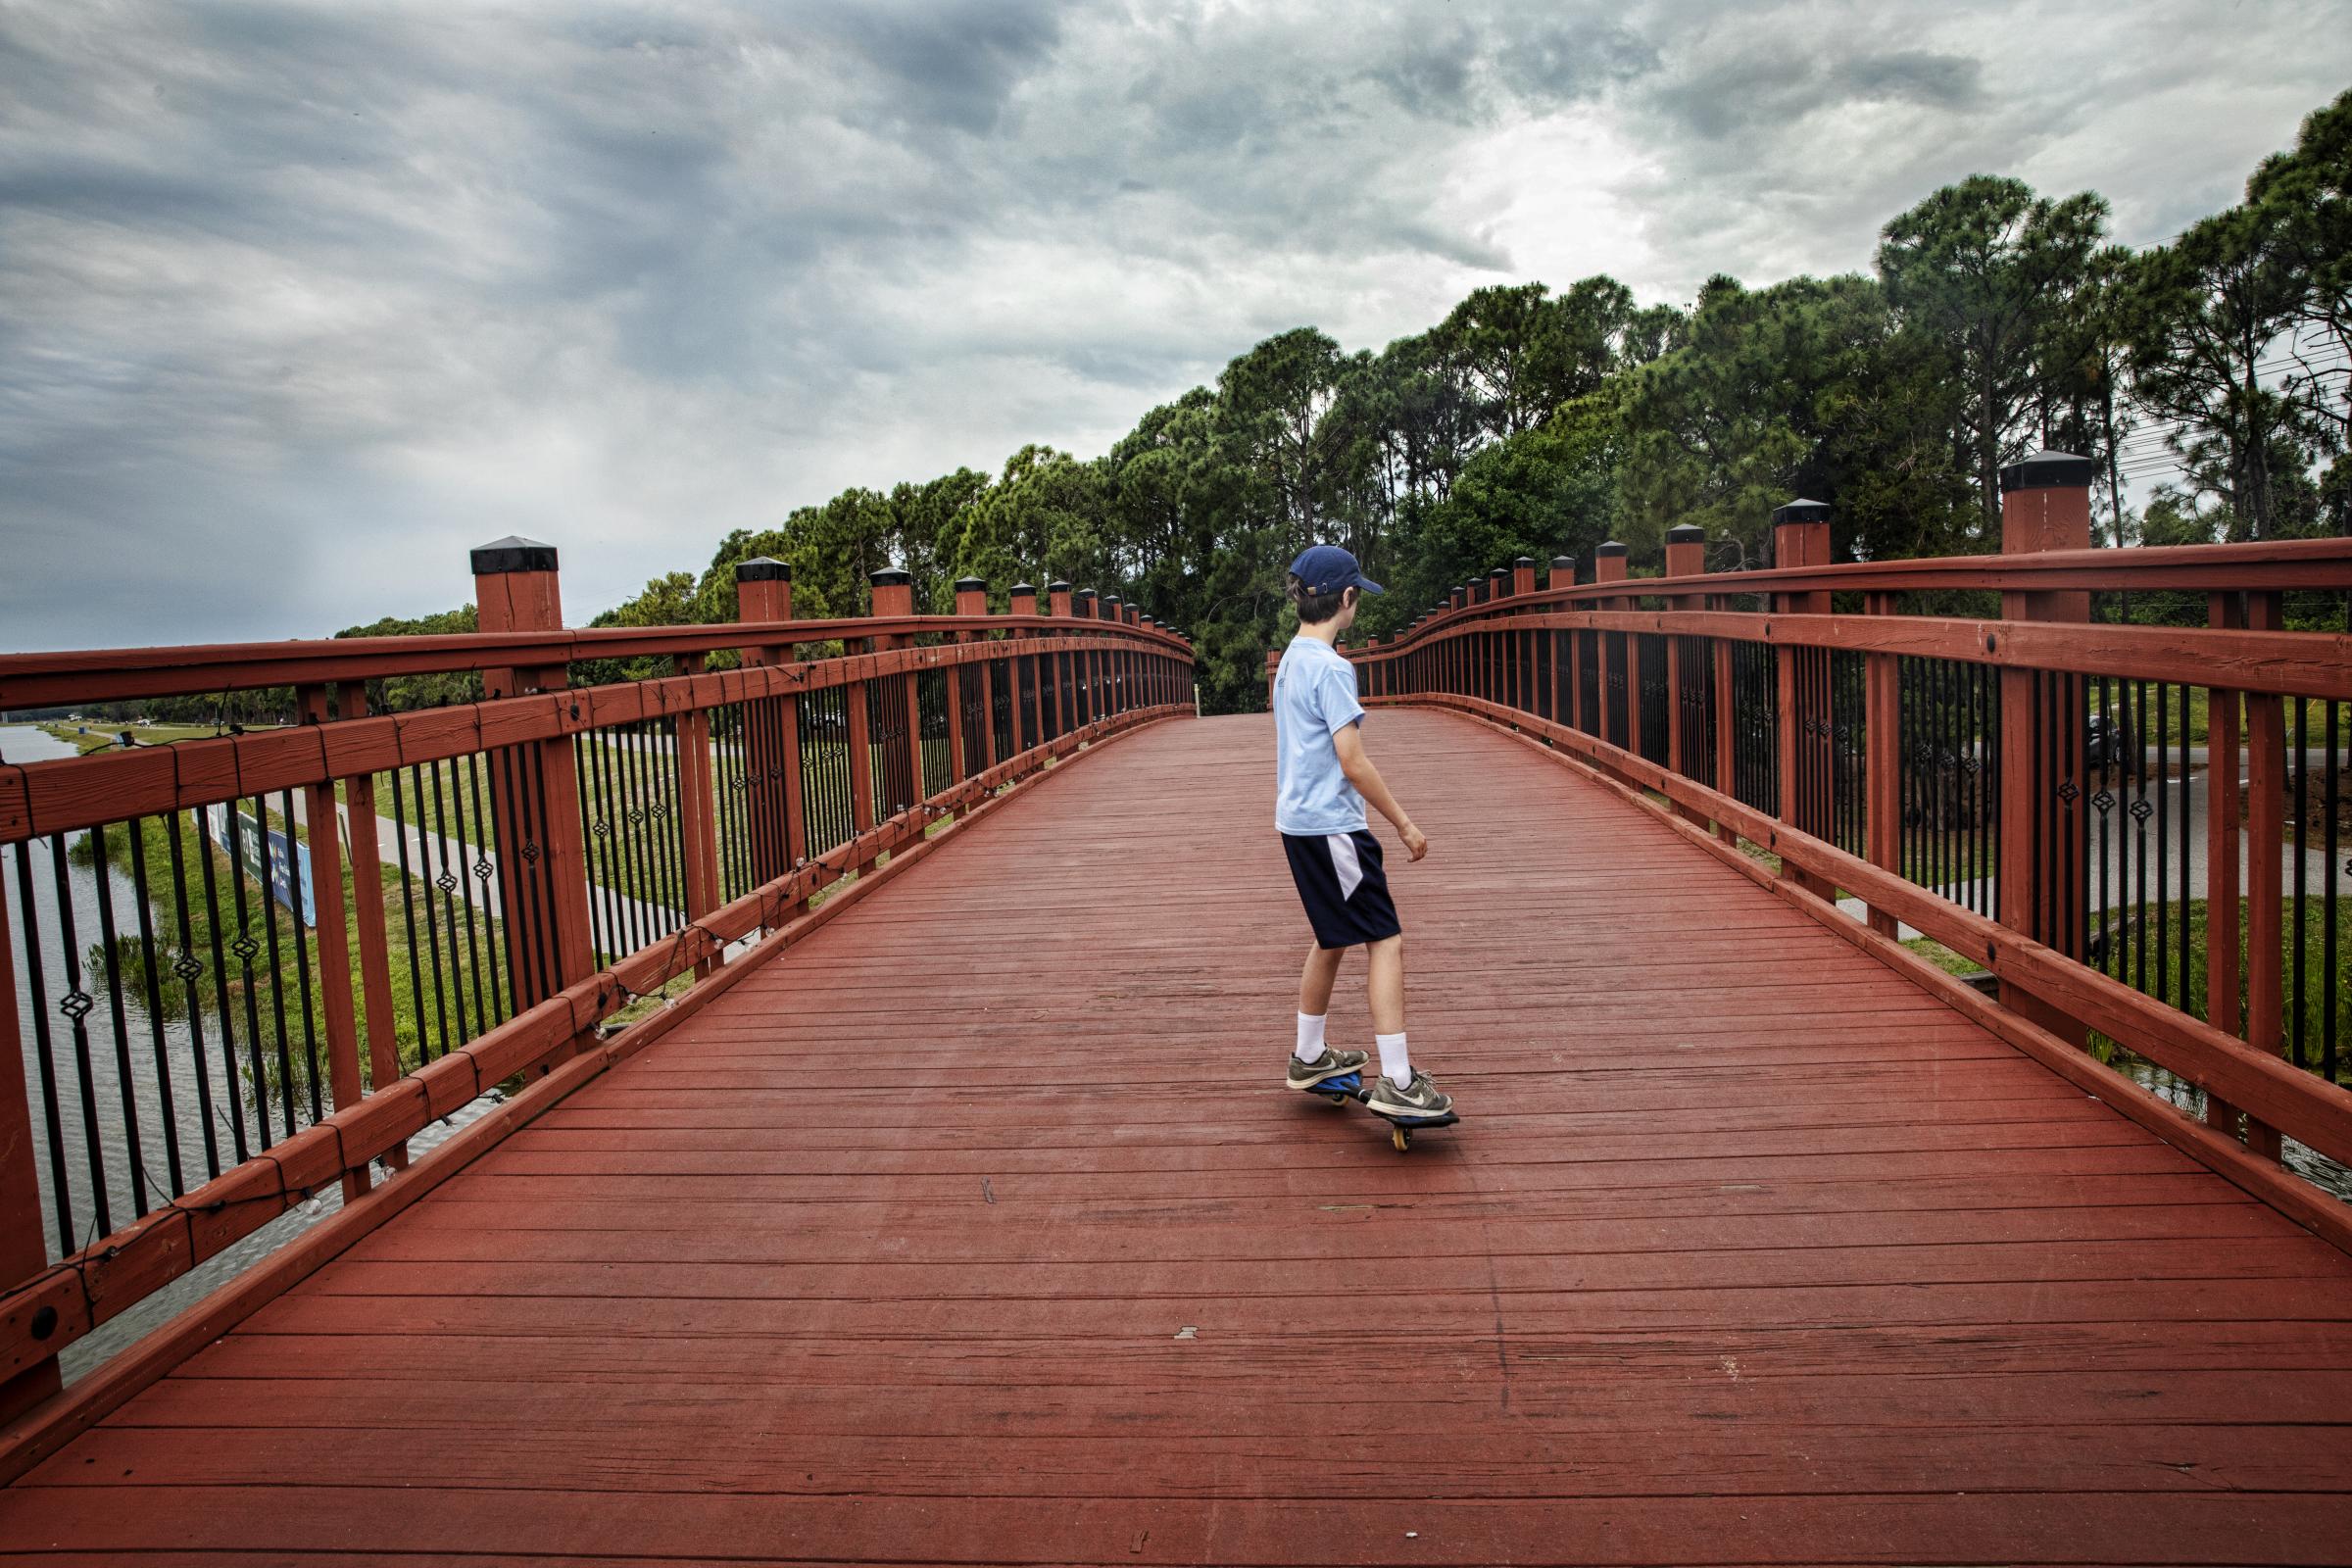 Growing Up - A young boy rides his skateboard across a bridge at...